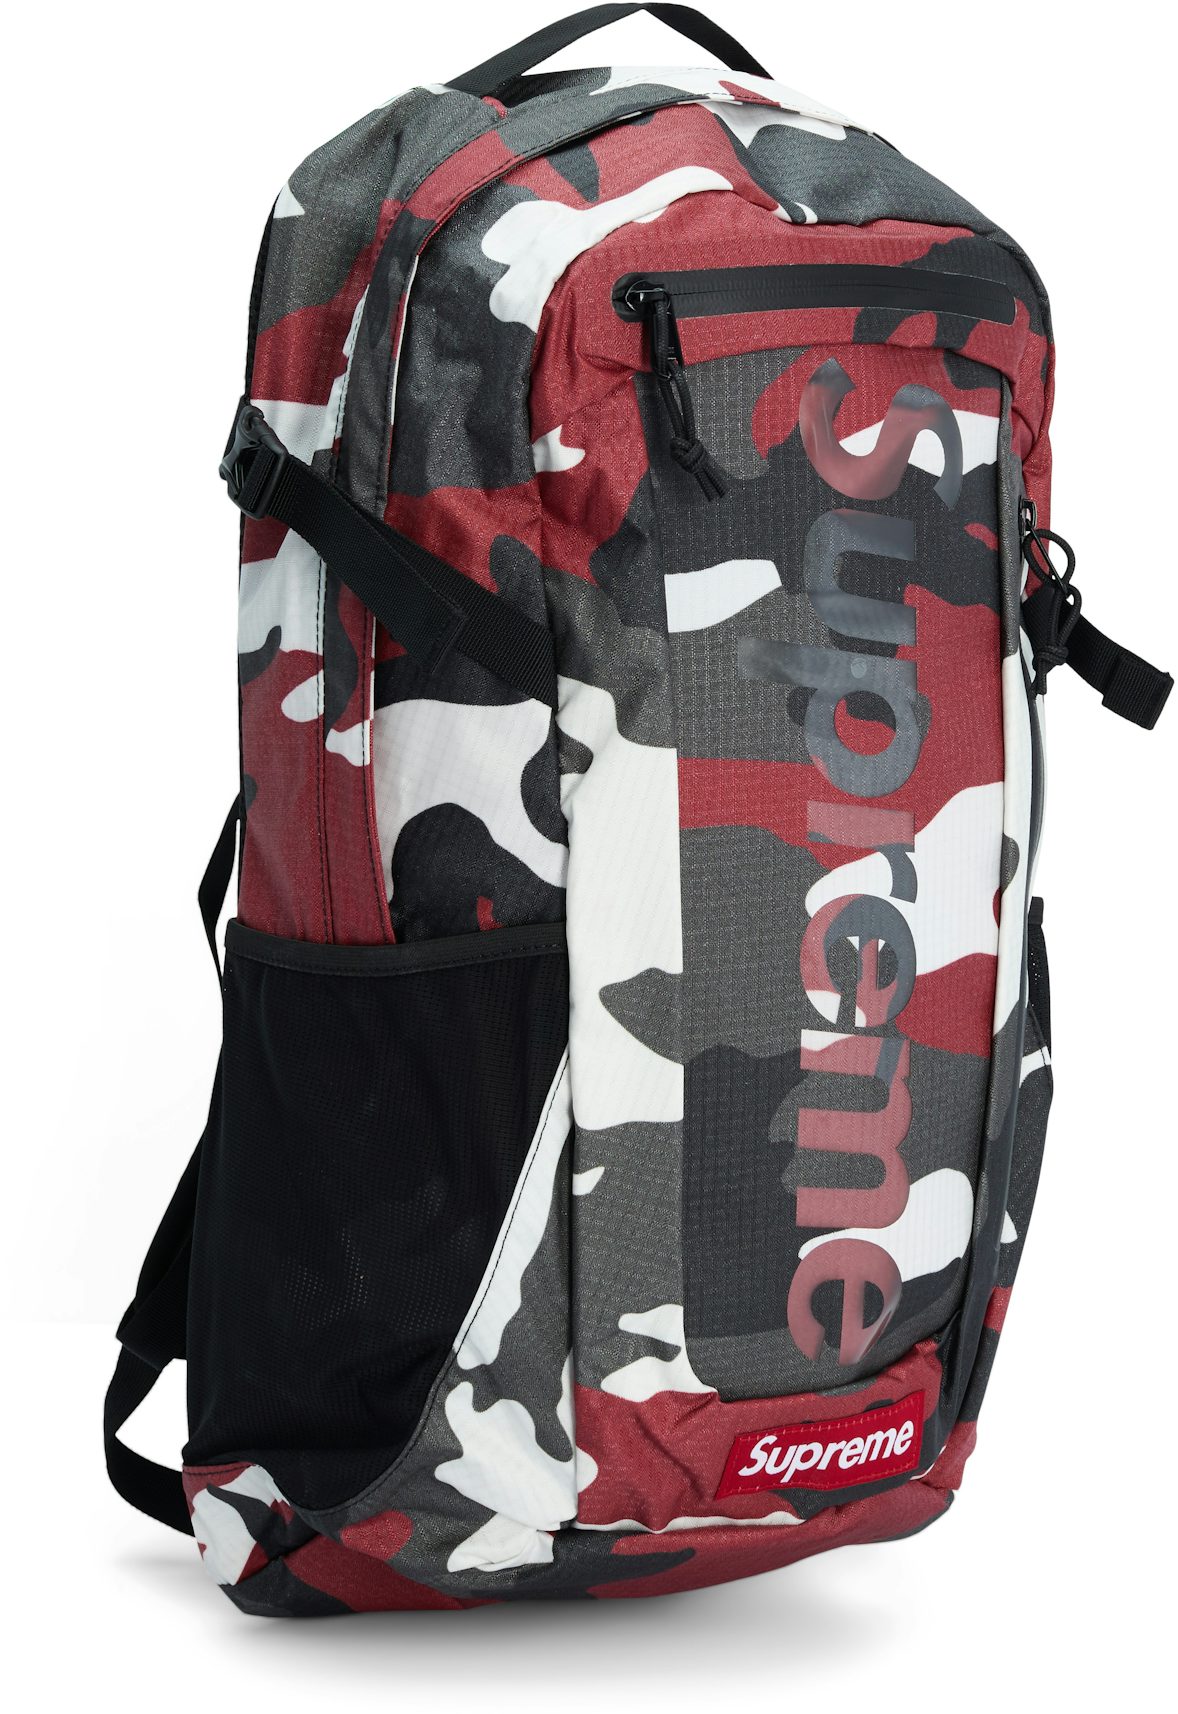 red supreme backpack